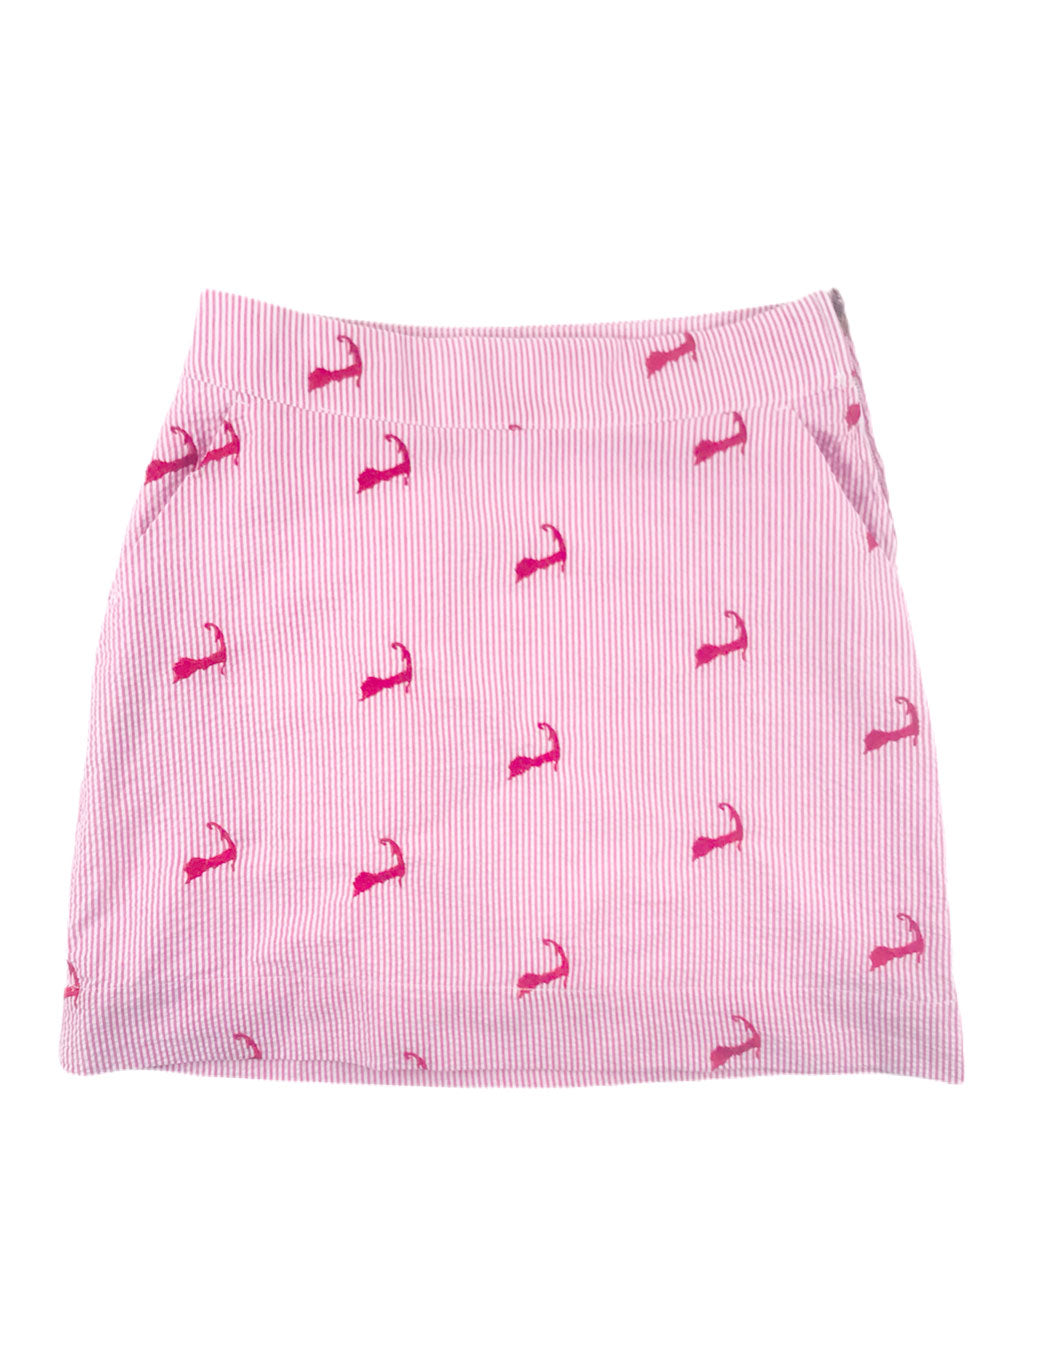 Pink Seersucker Women's Skirt with Embroidered Cape Cods